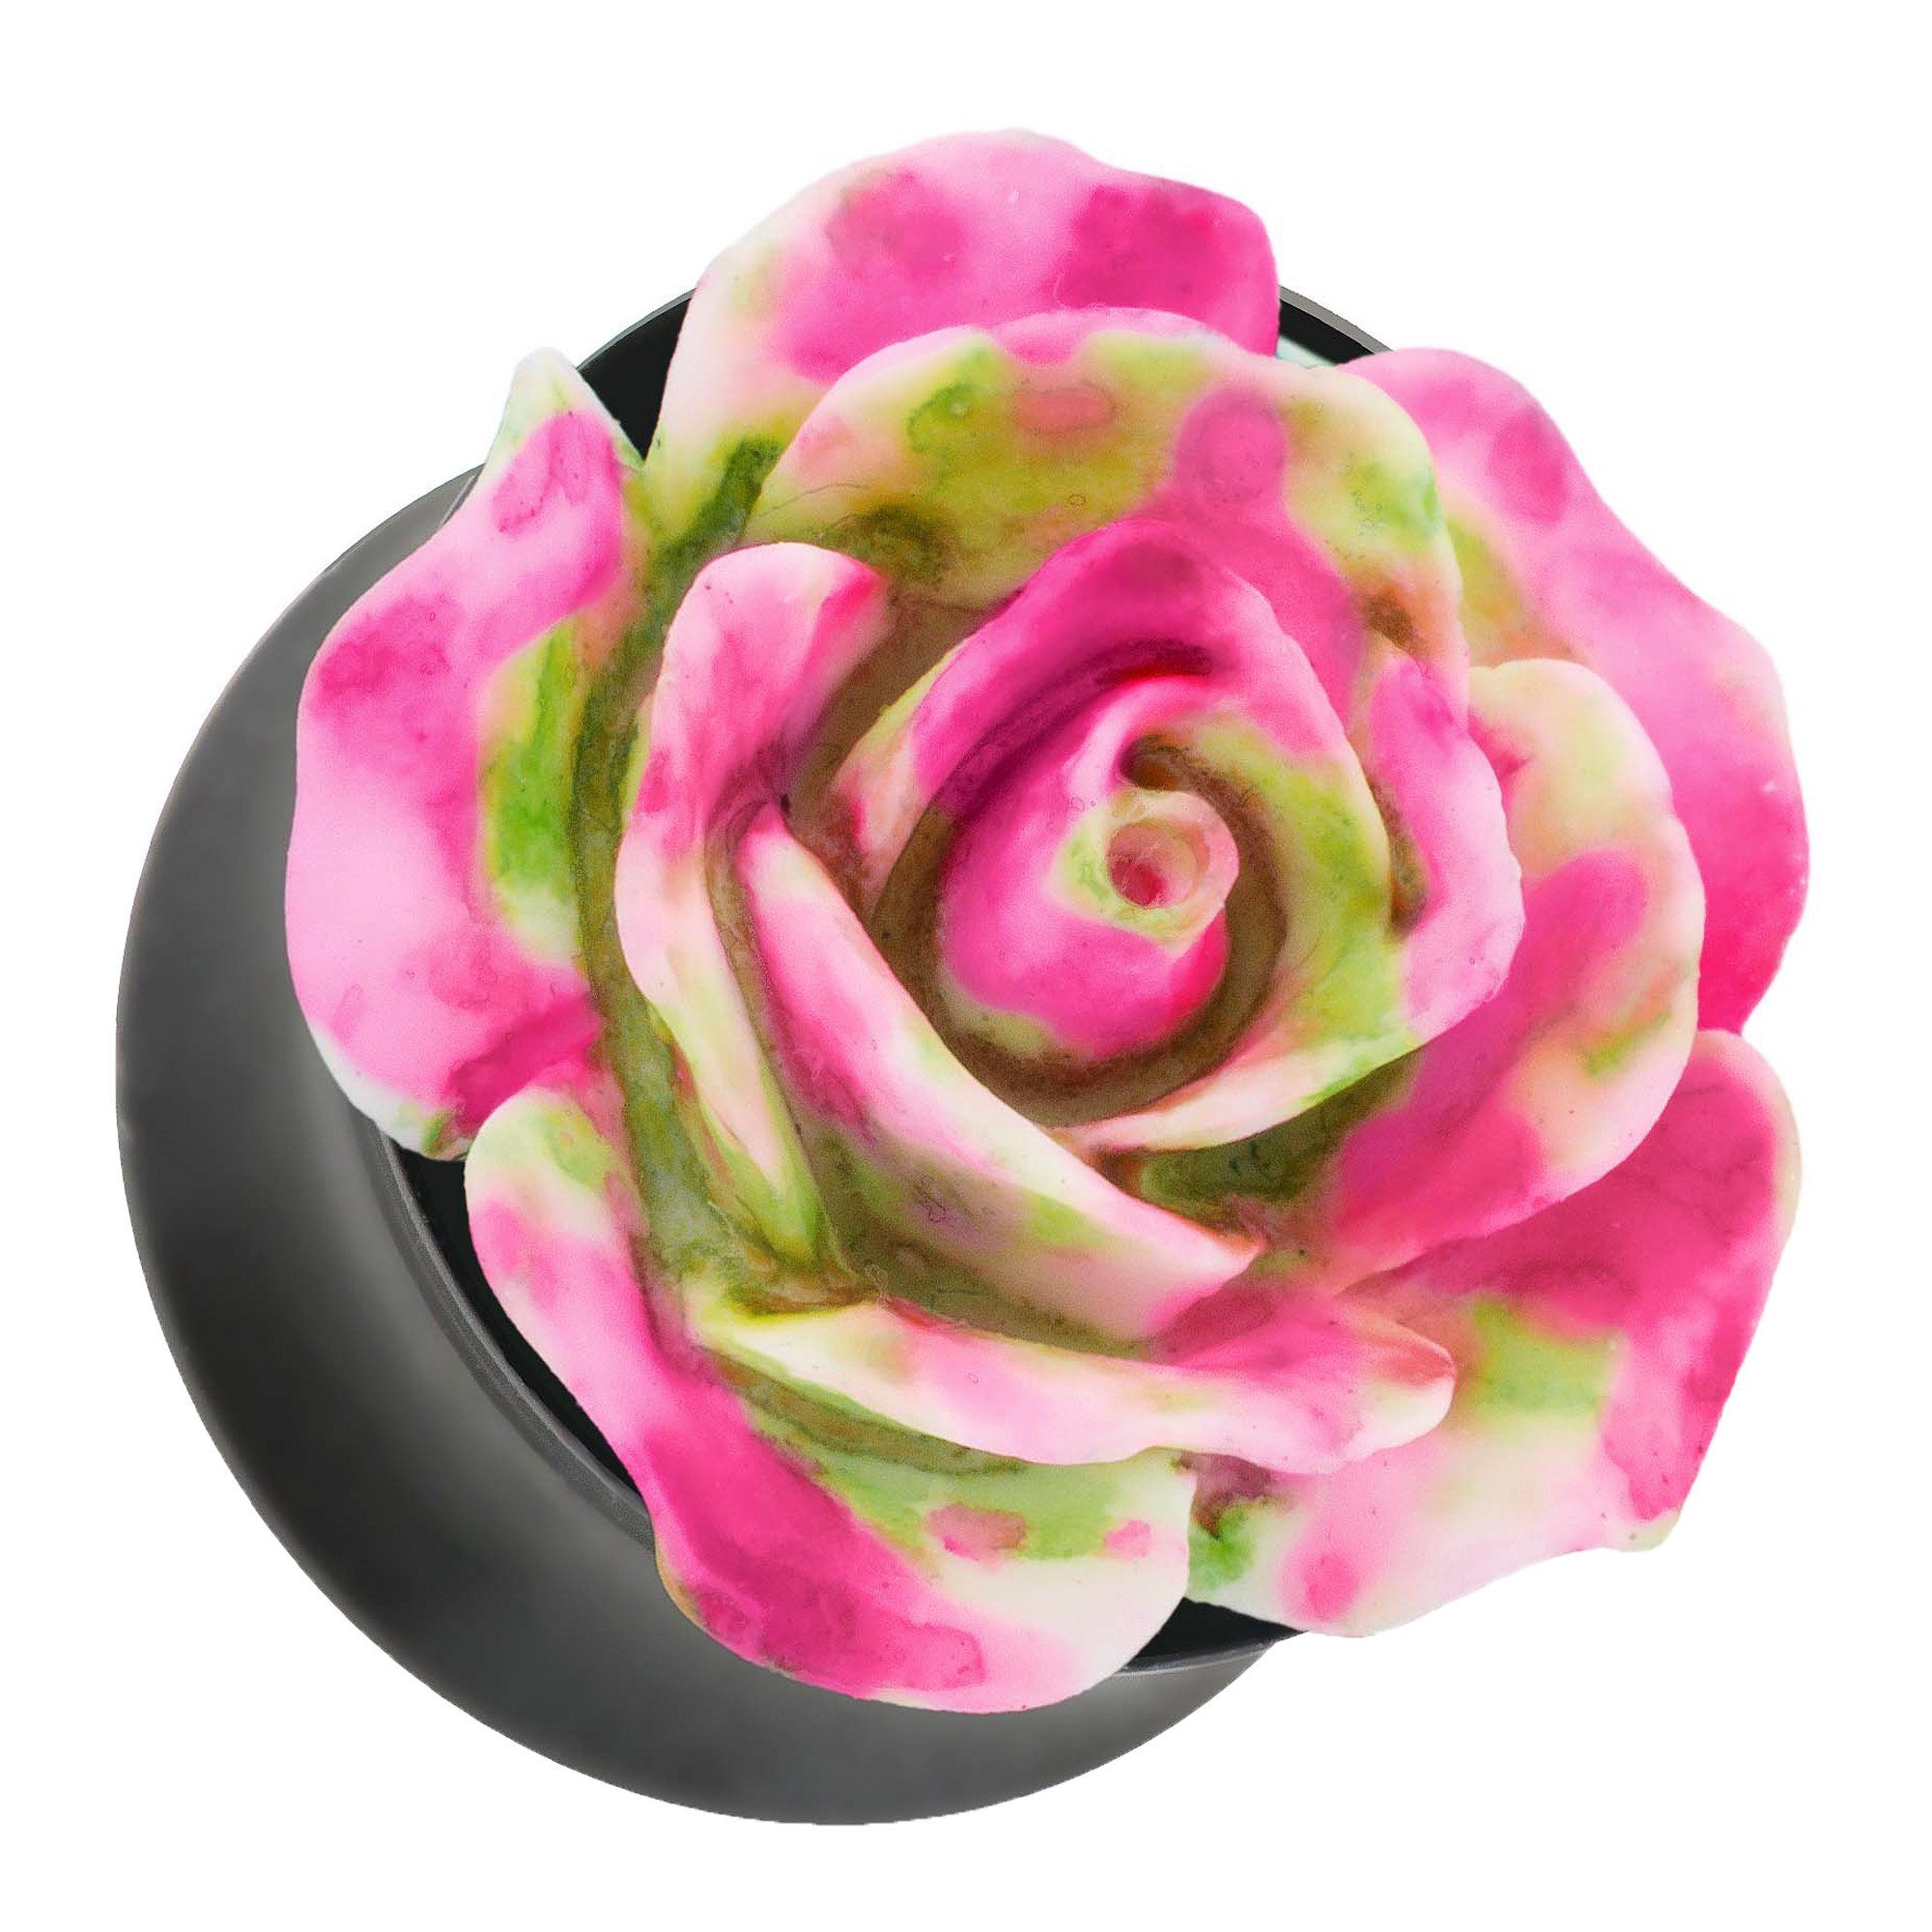 Taffstyle Plug Piercing Ohrpiercing Rose in 3D Optik Pink Grün, Ohr Plug Flesh Tunnel Piercing Ohrpiercing Rose in 3D Optik